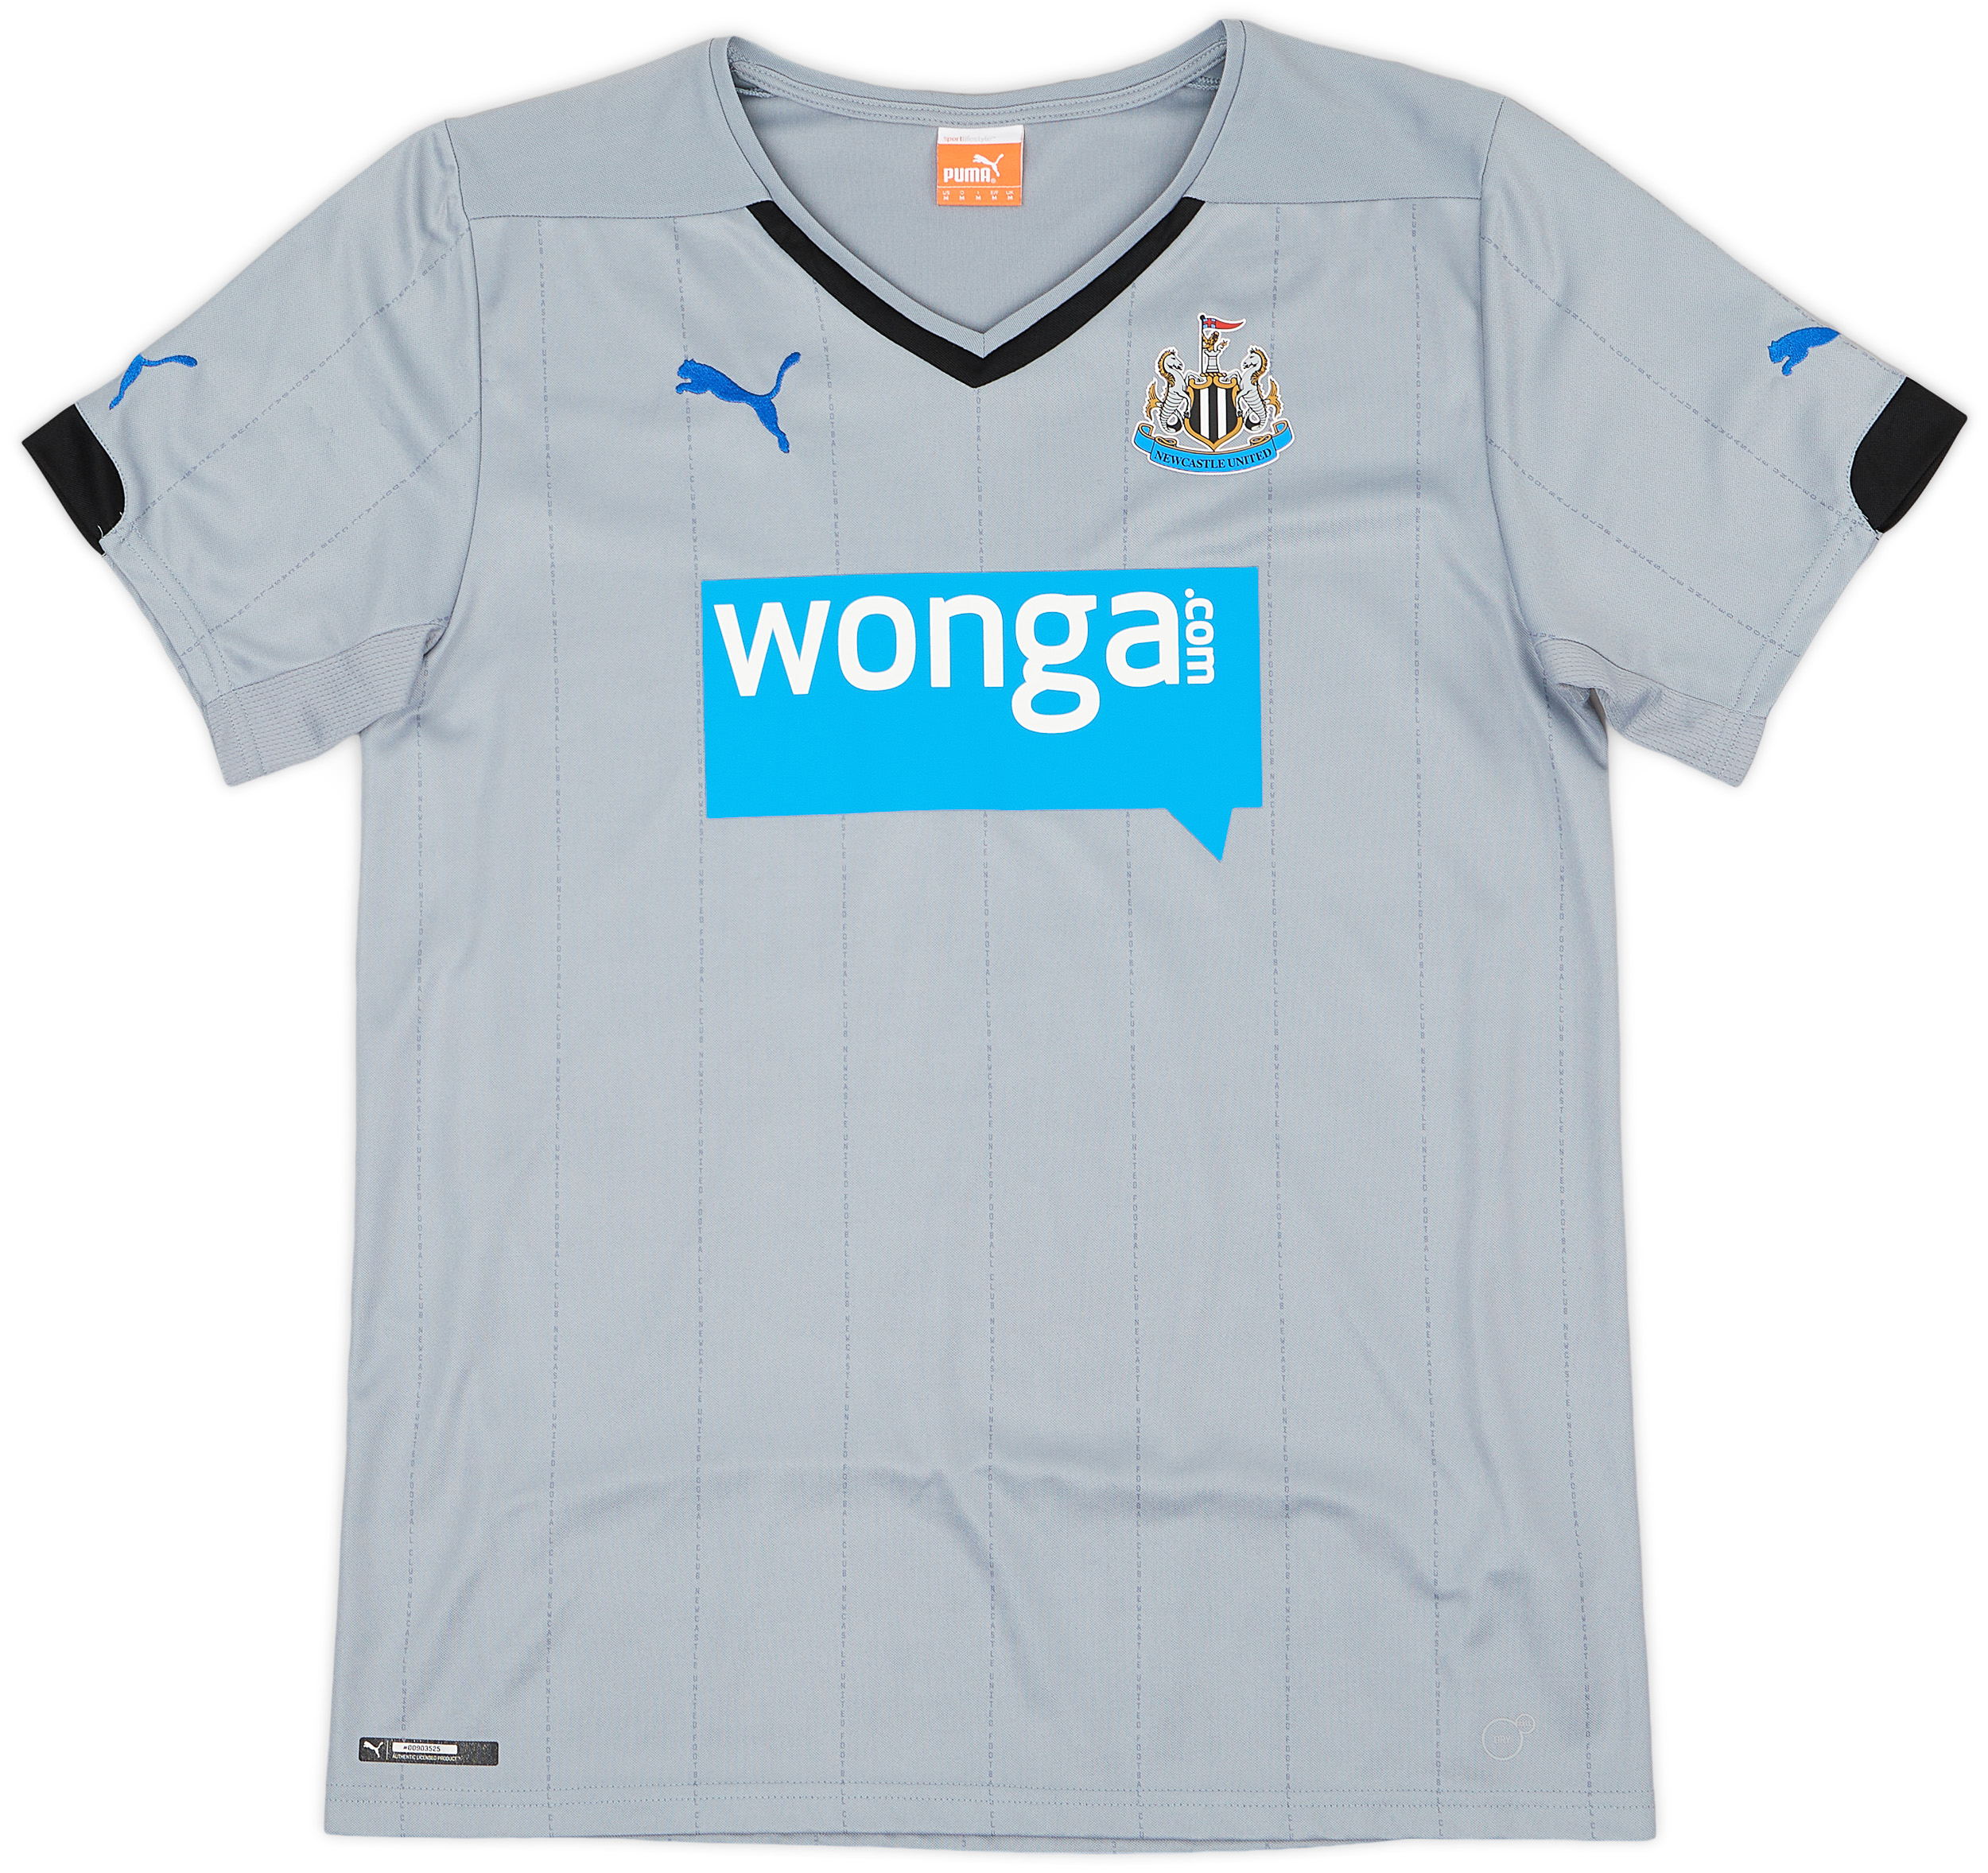 2014-15 Newcastle United Away Shirt - 9/10 - ()